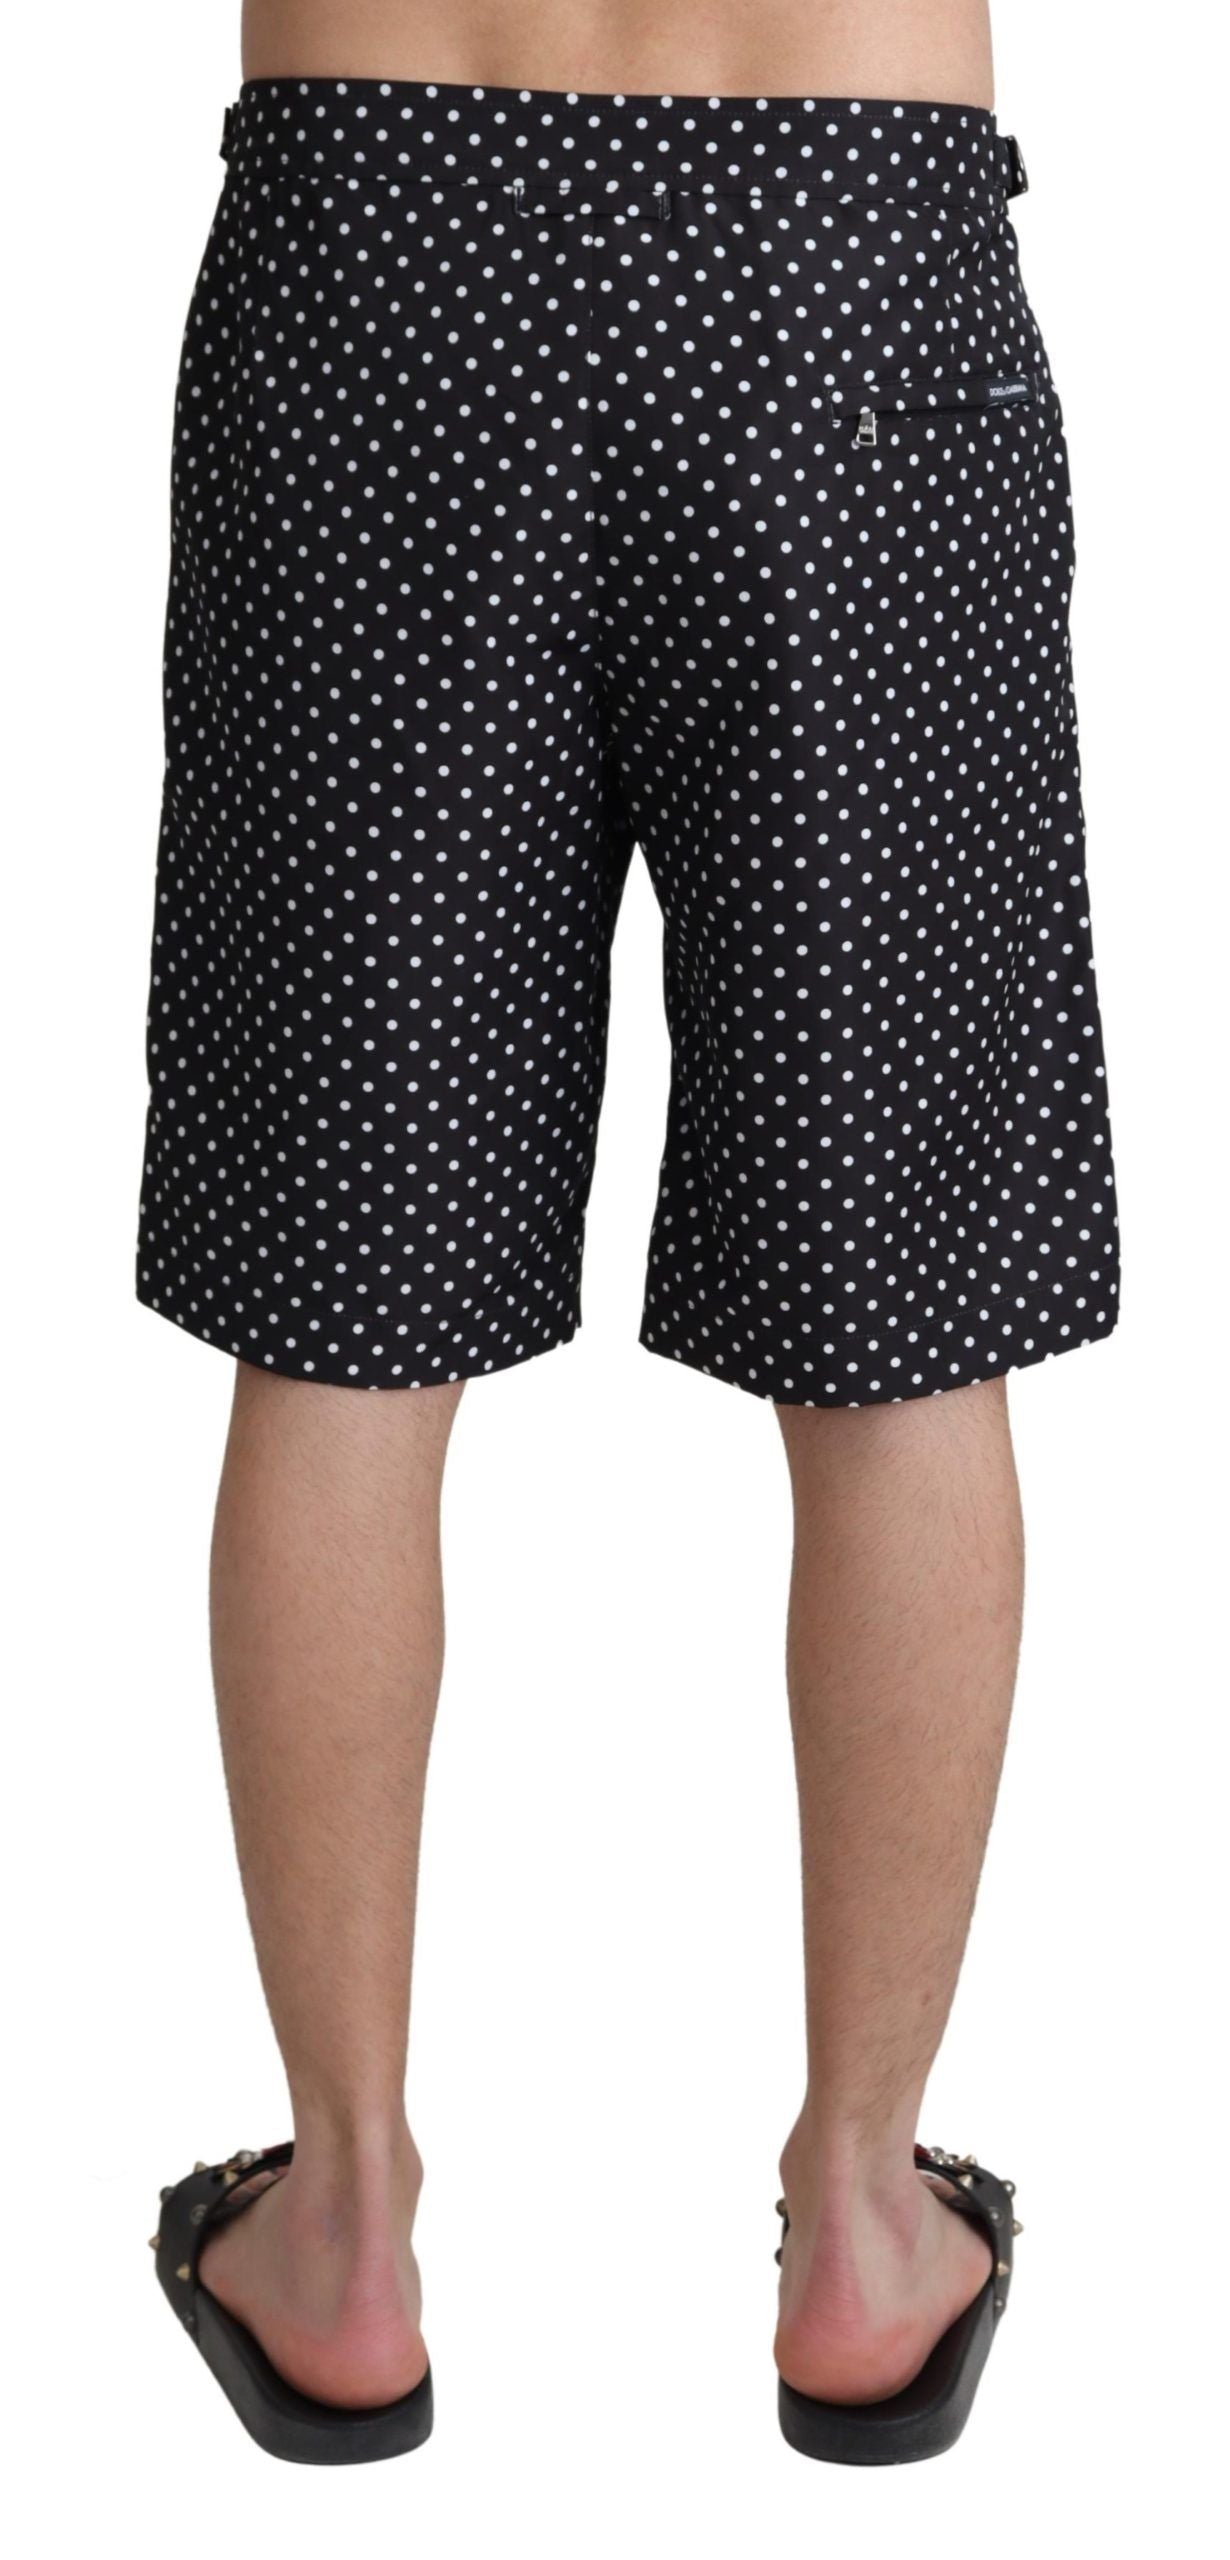 Black Polka Dots Beachwear Shorts Swimwear